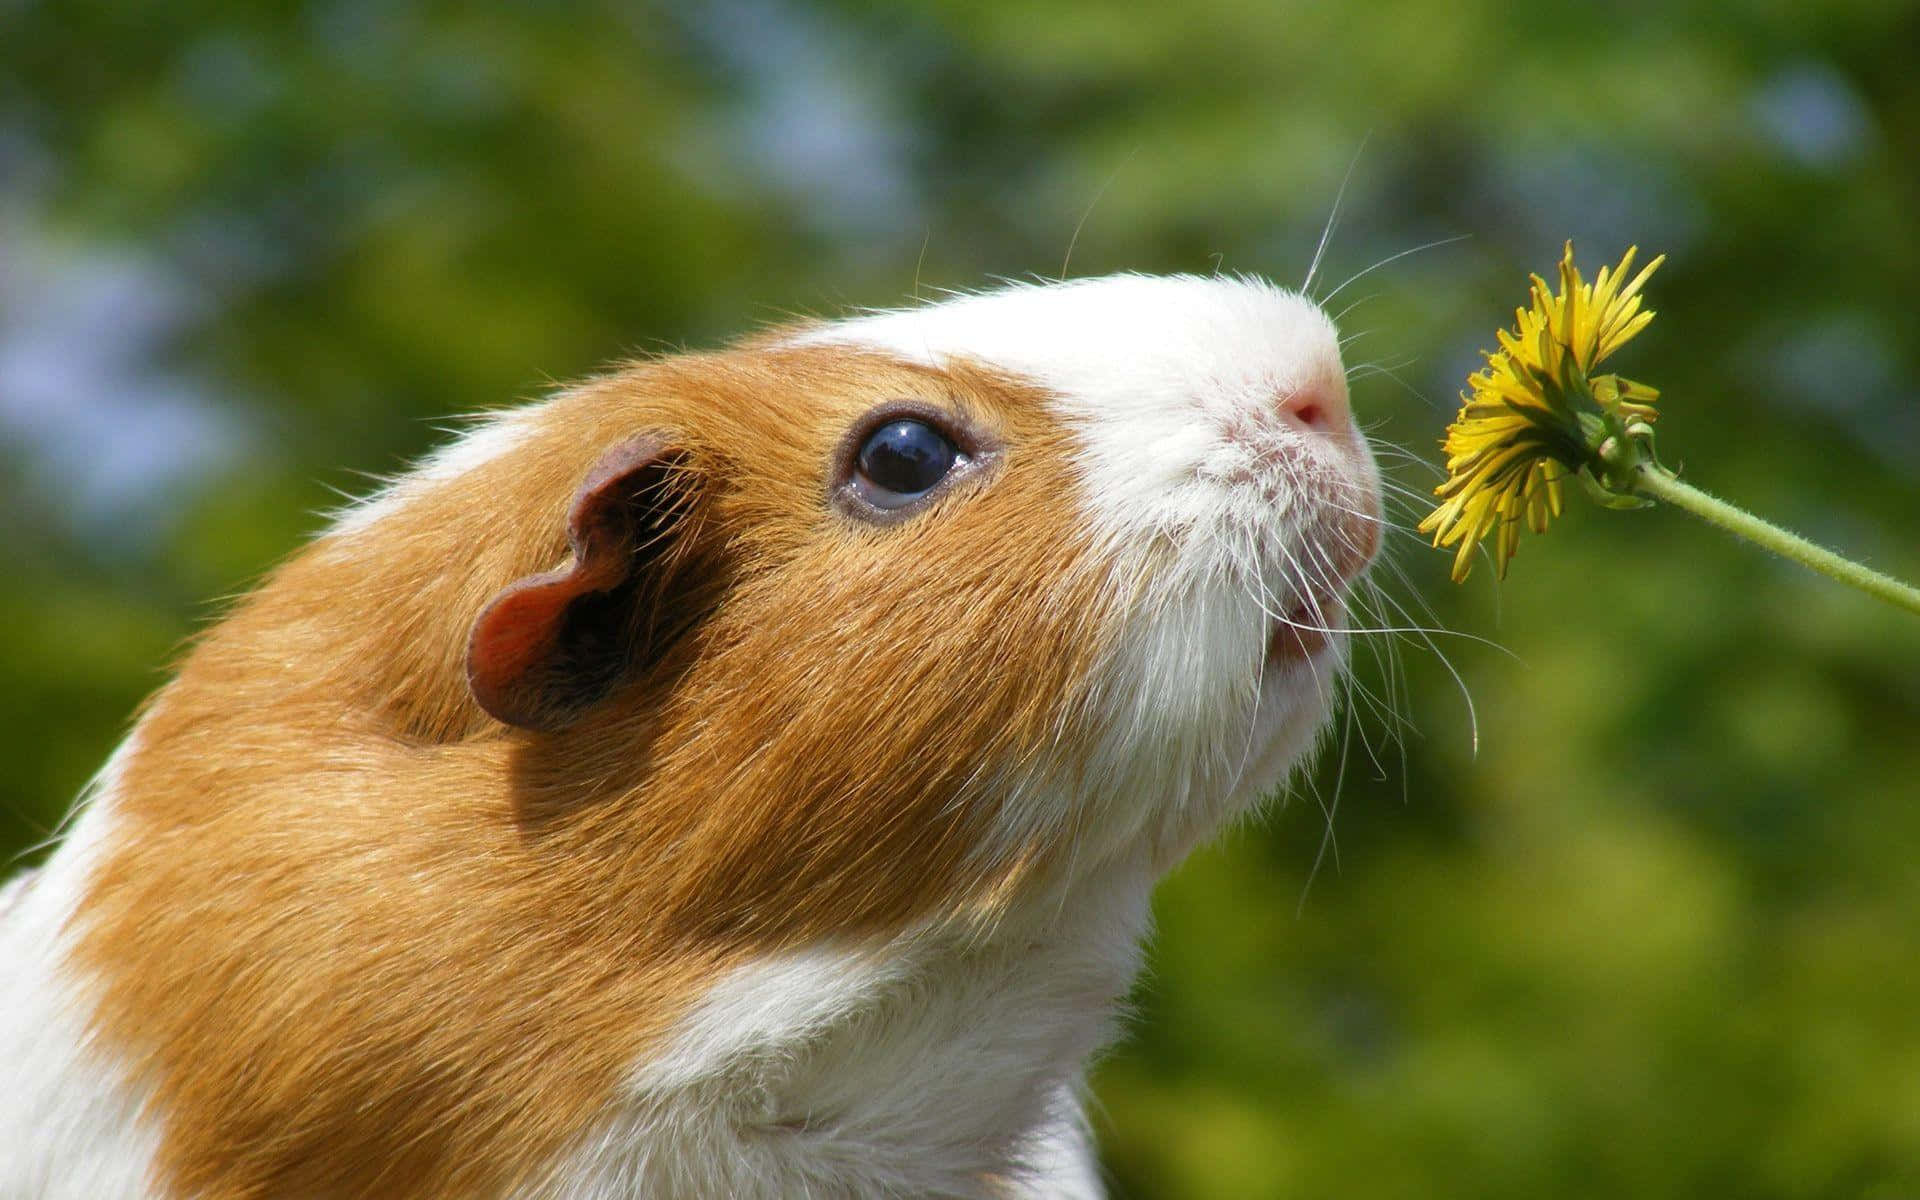 A tiny hamster enjoying a snack.